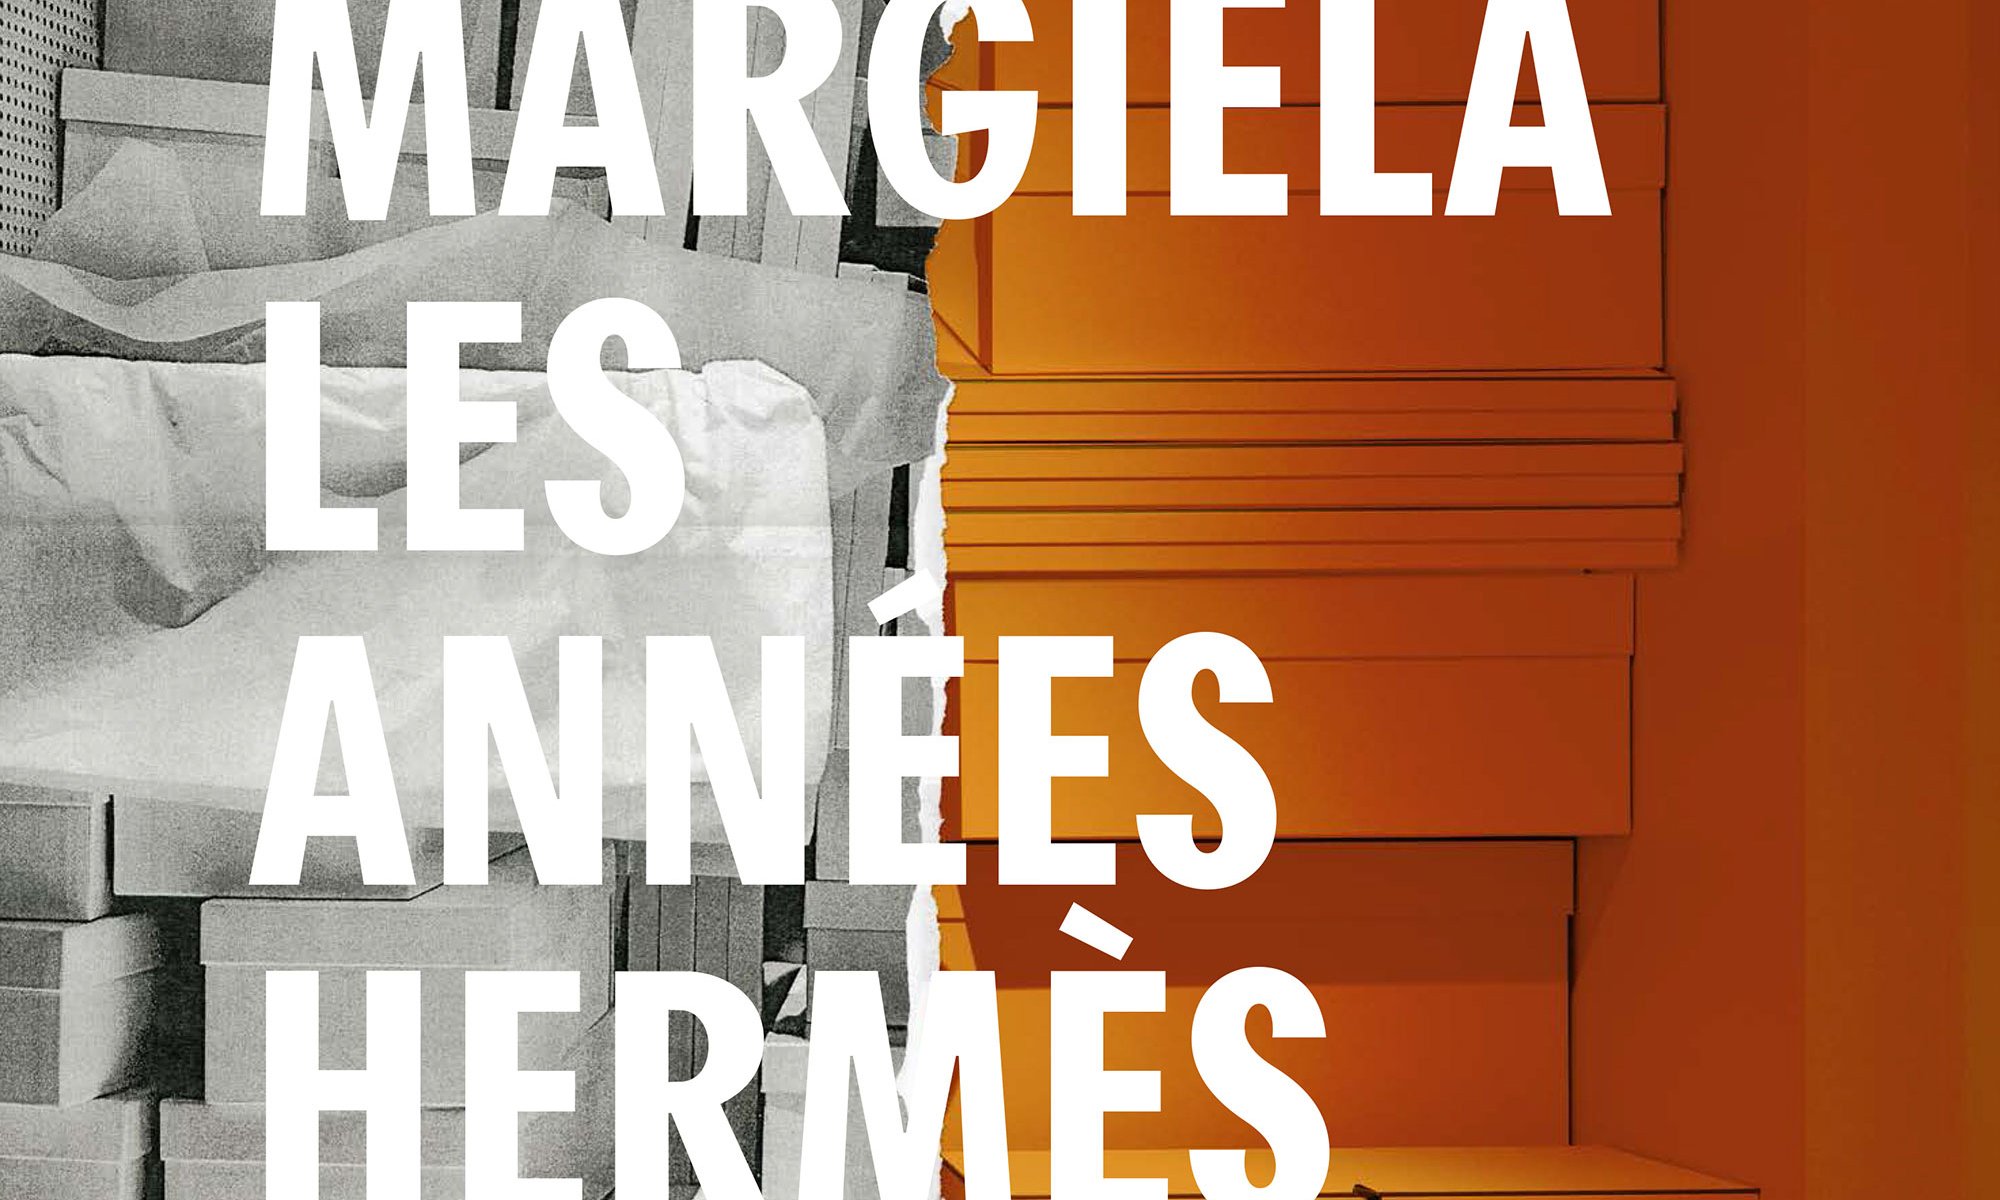 Margiela 时期的 Hermès 回顾展正在举办